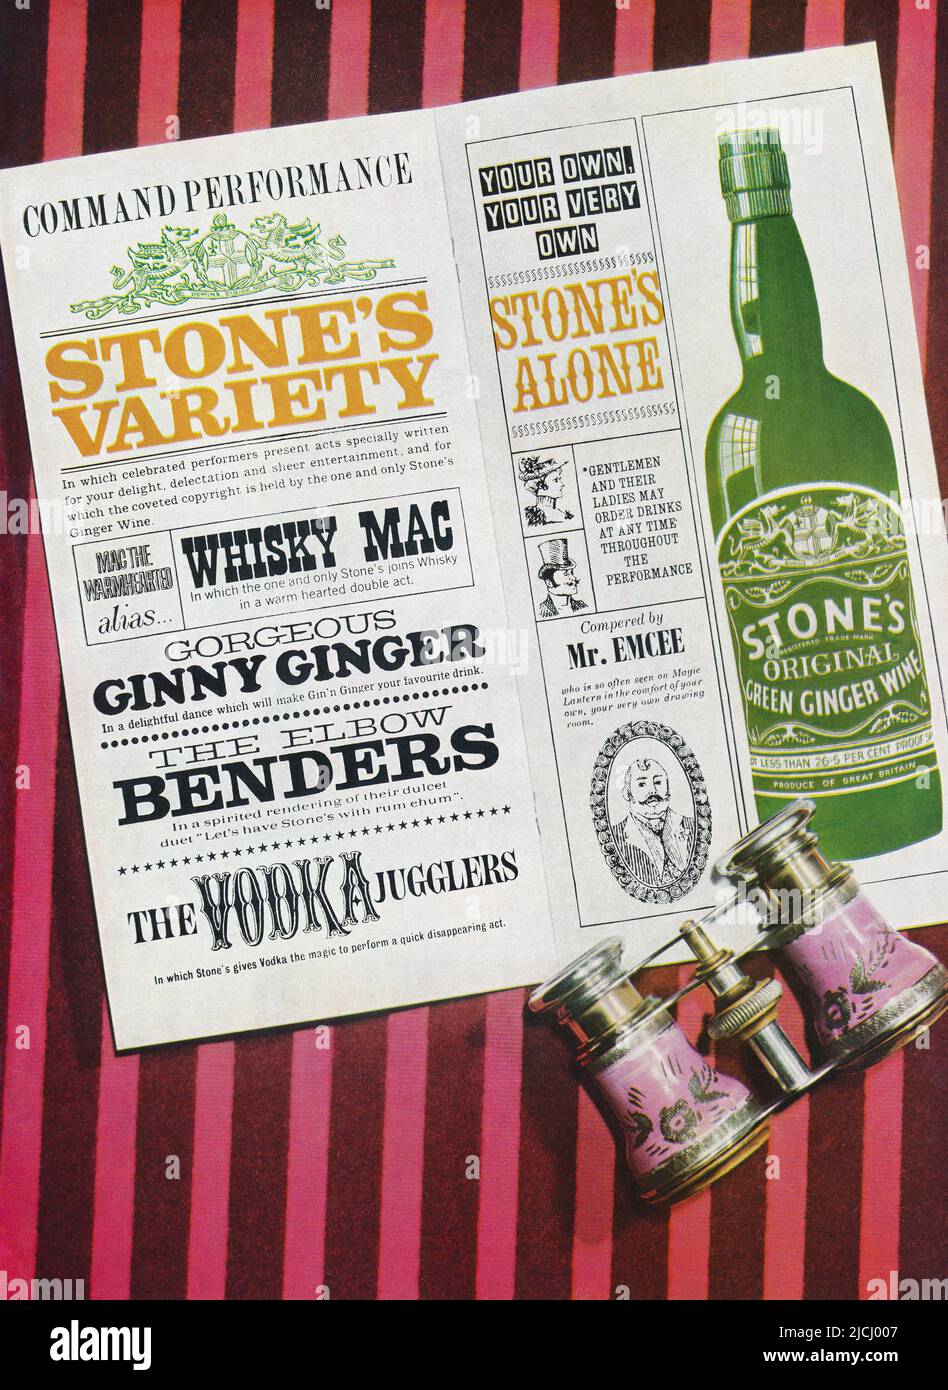 1964 British advertisement for Stone's Original Green Ginger Wine. Stock Photo